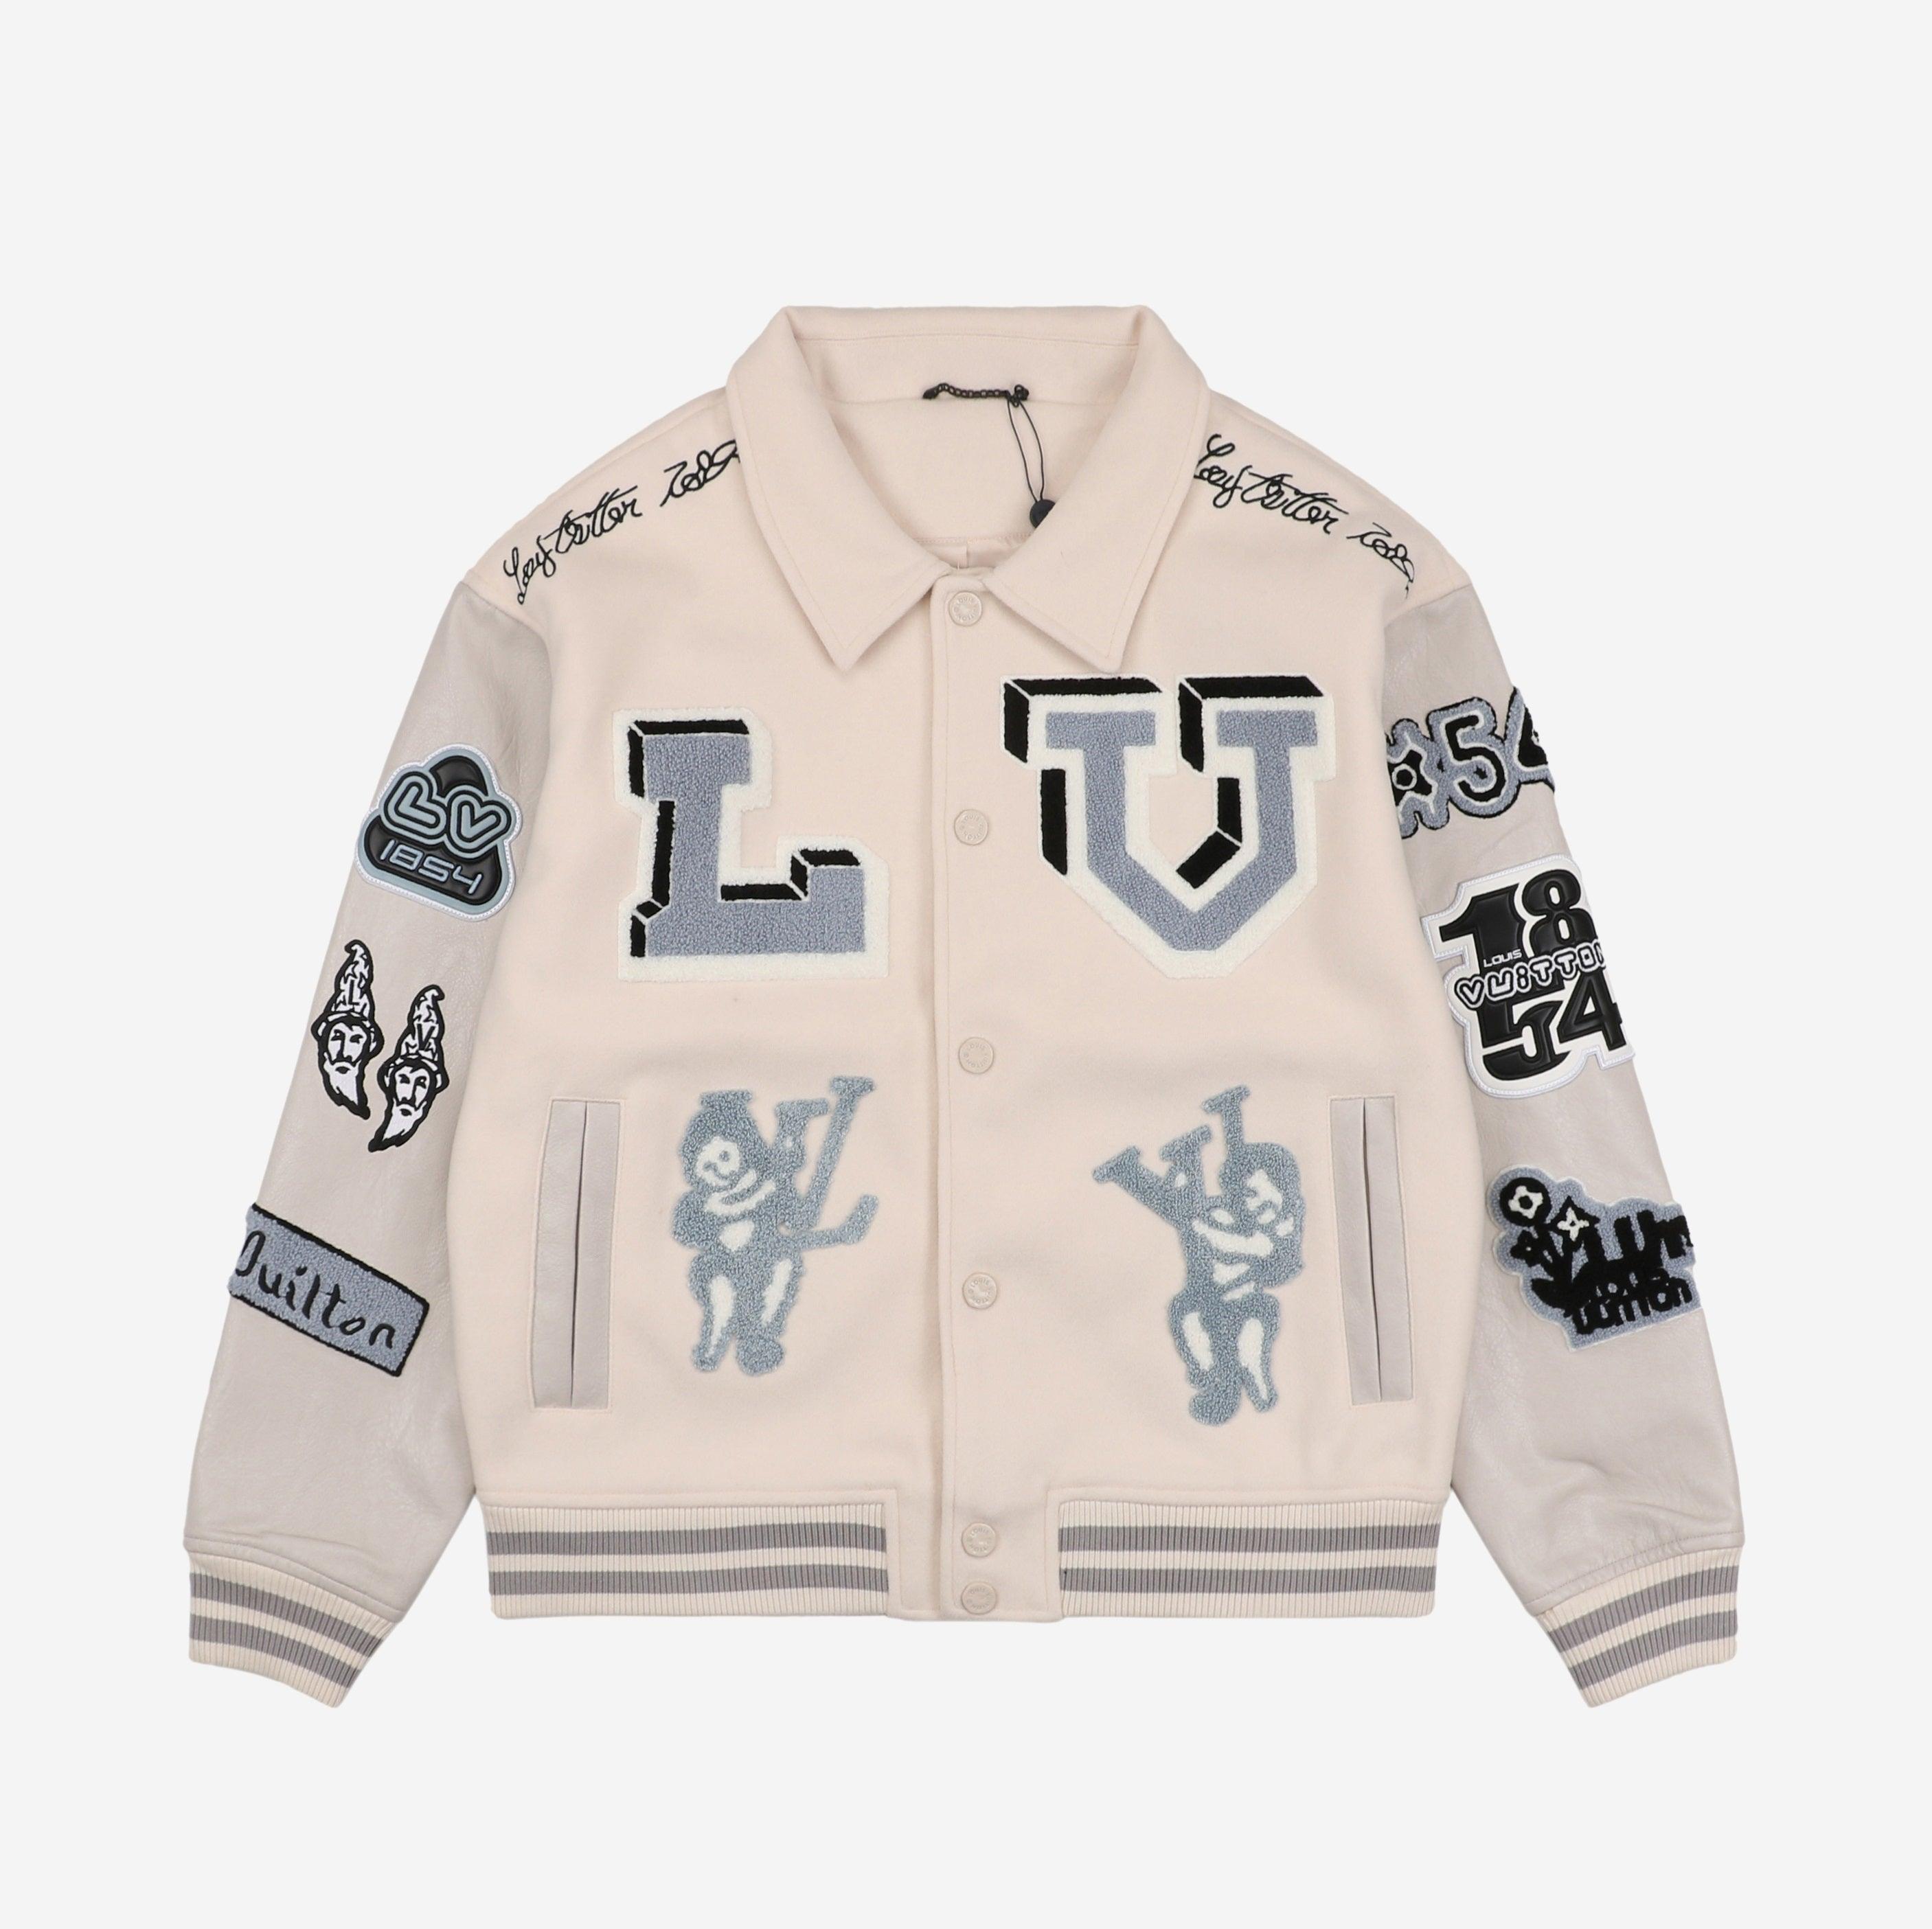 Statement Piece 💥 LV Varsity Jacket #louisvuitton